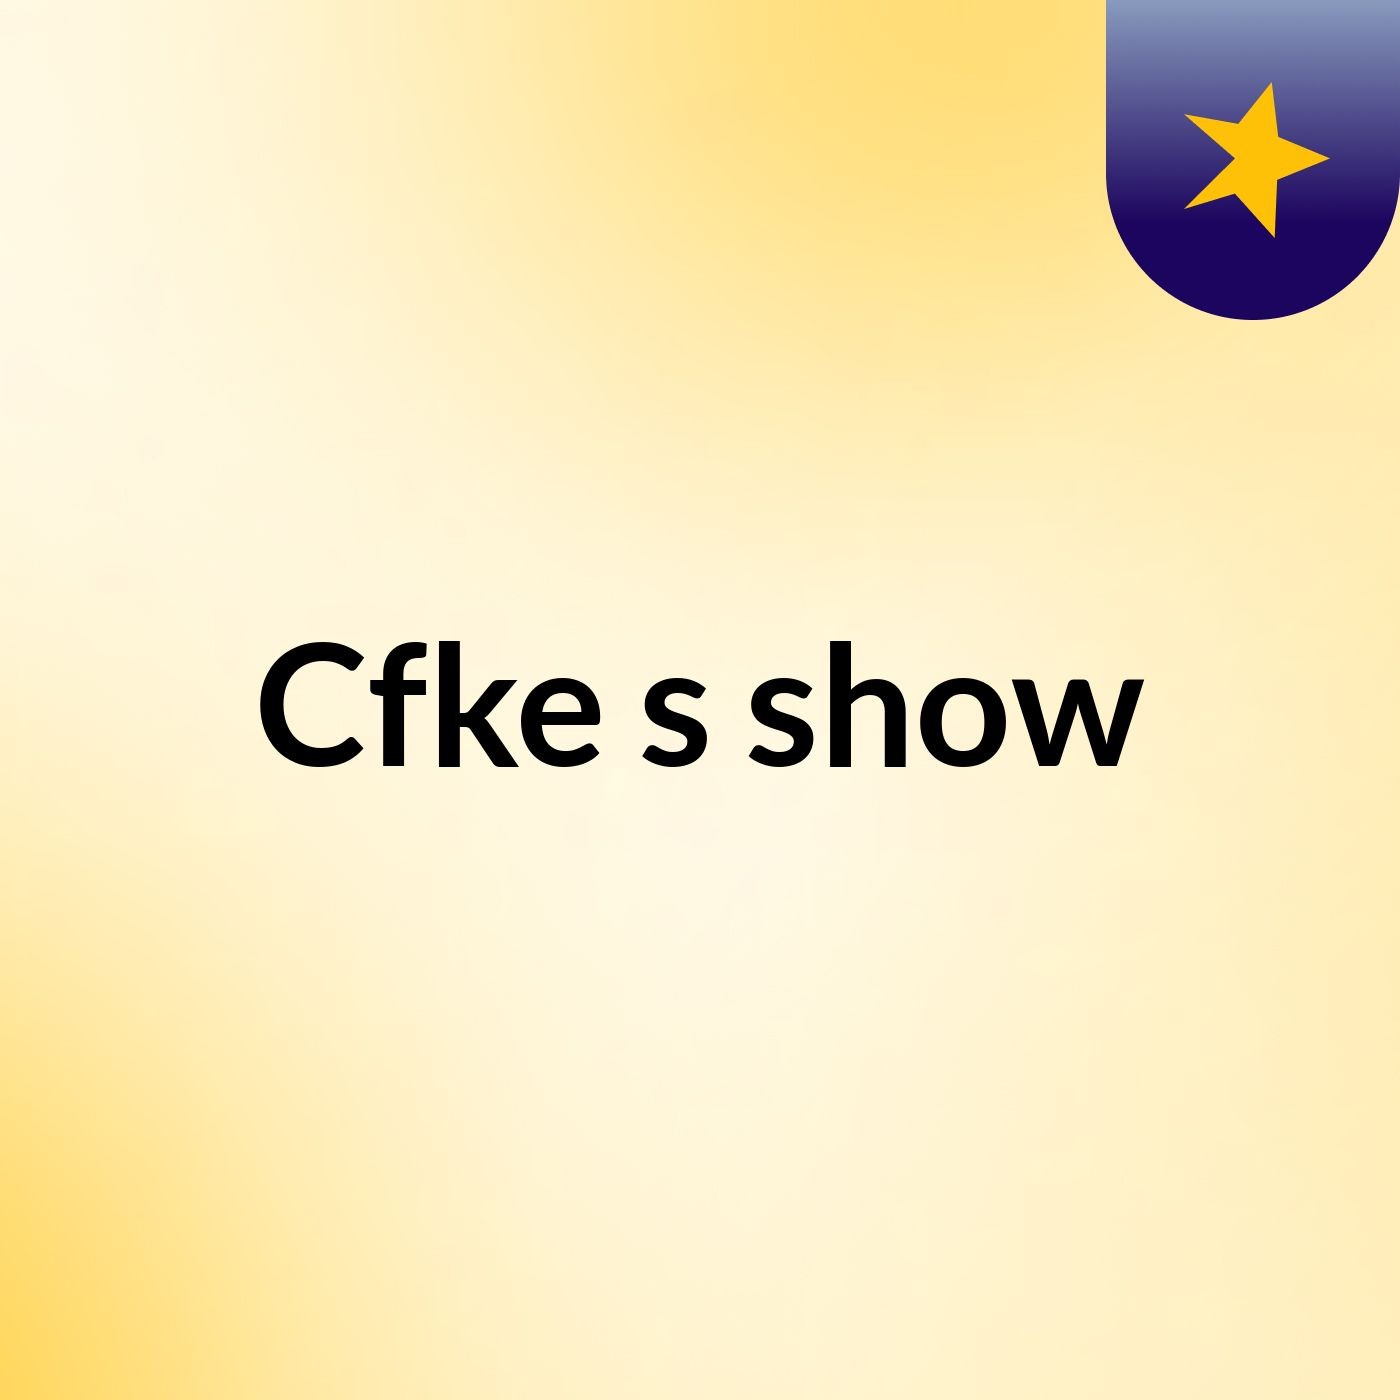 Cfke's show